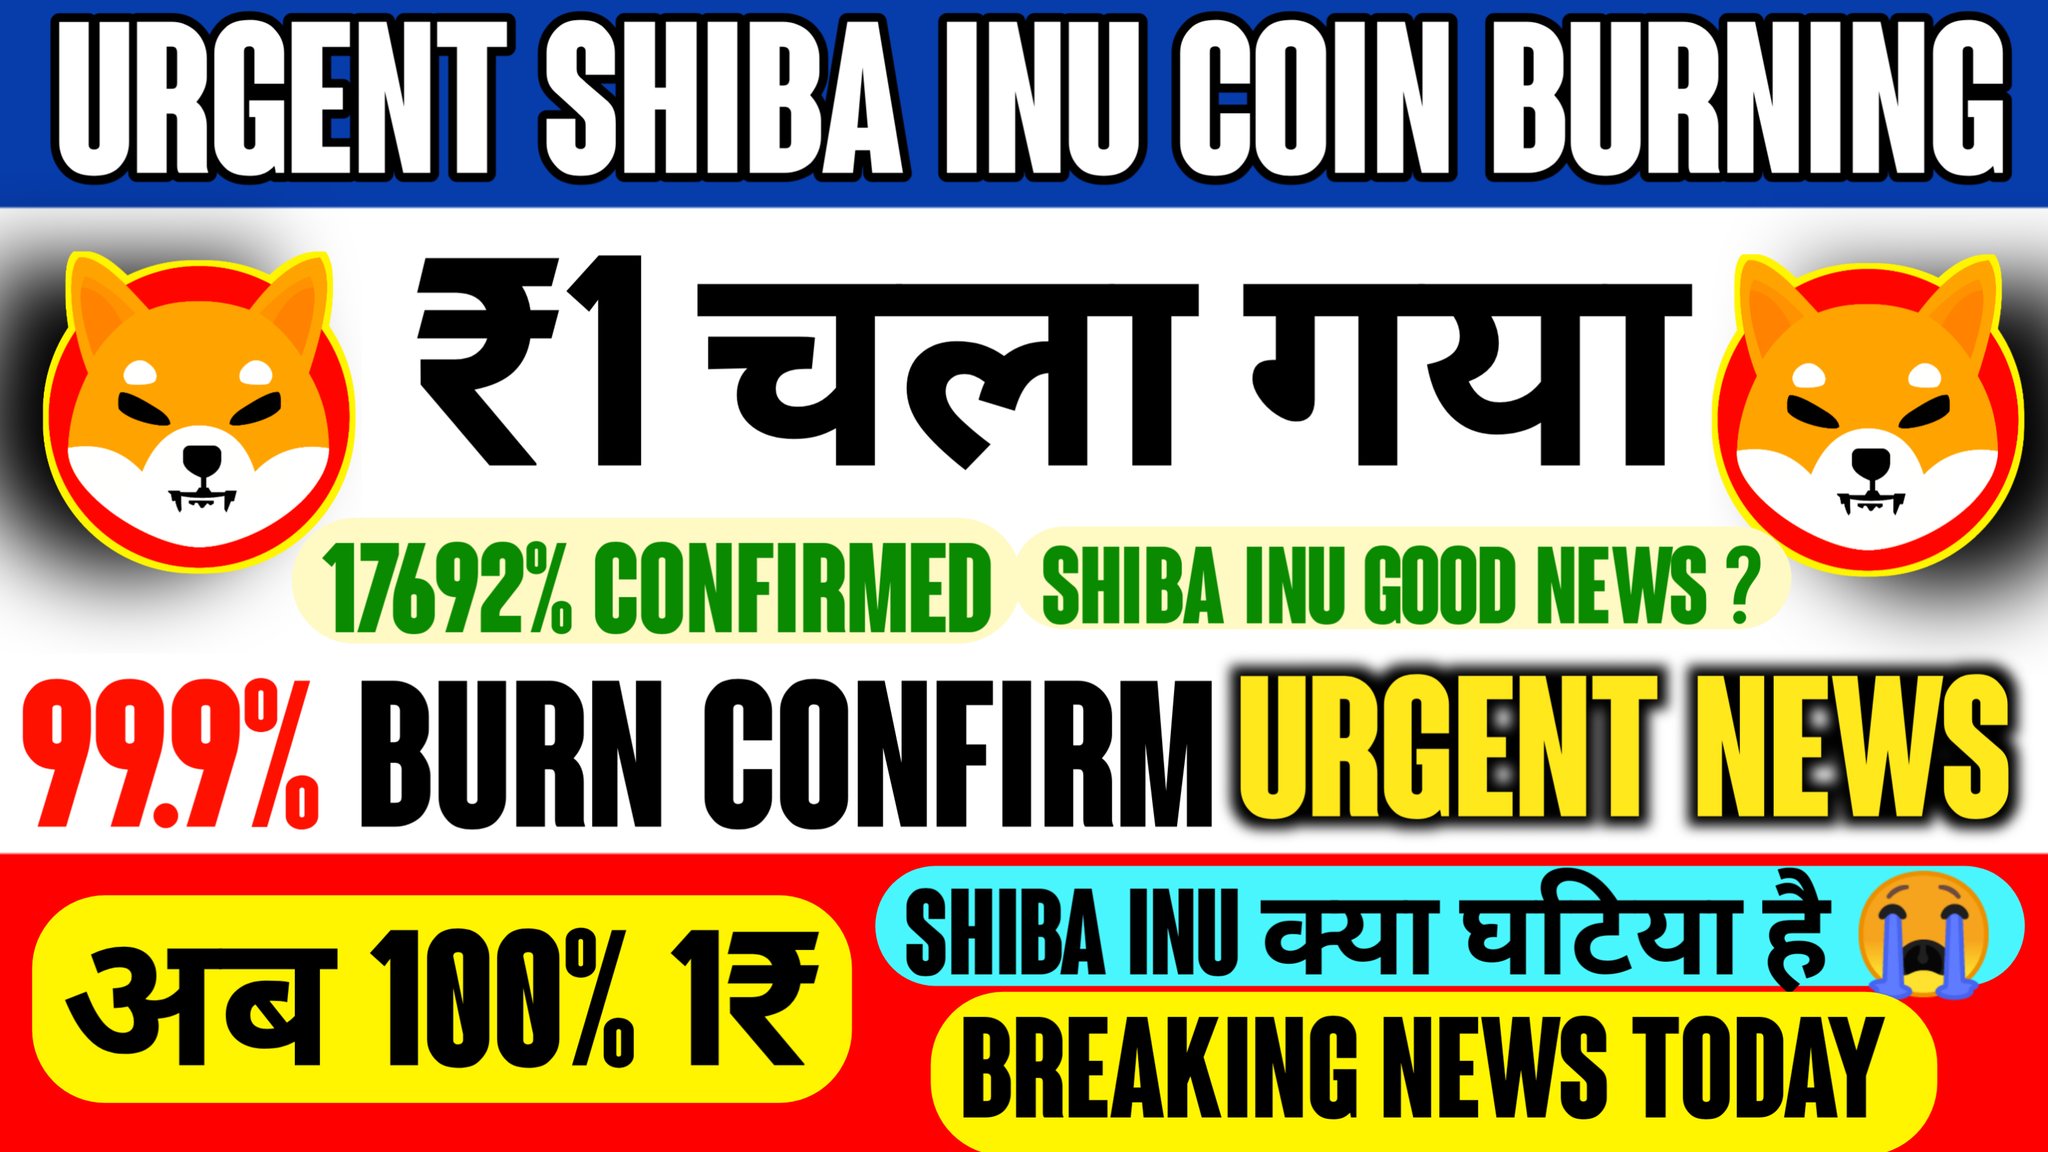 shiba inu coin news today twitter